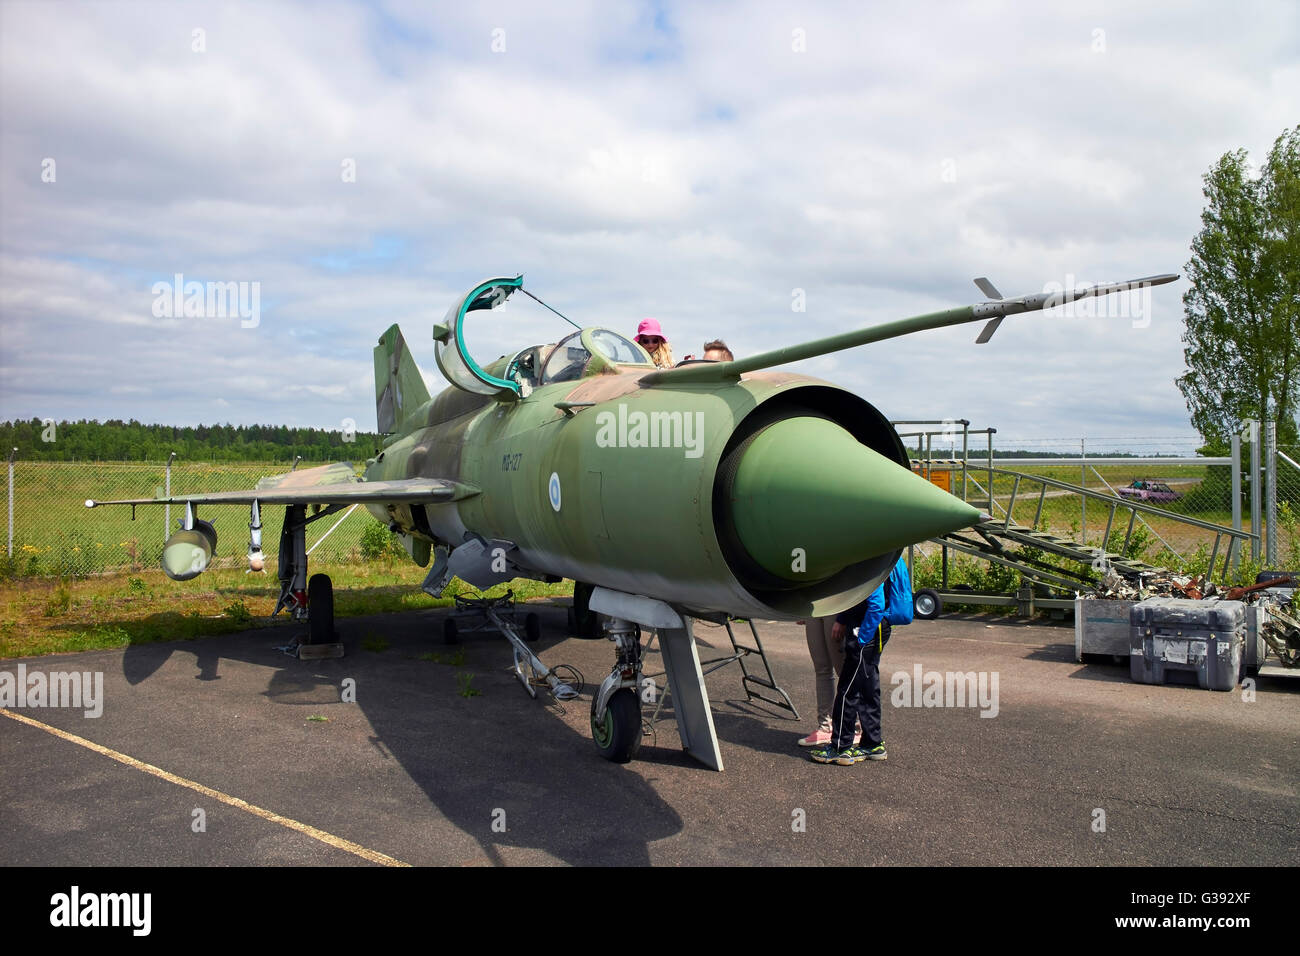 MiG-21bis jet fighter on display, Finland Stock Photo